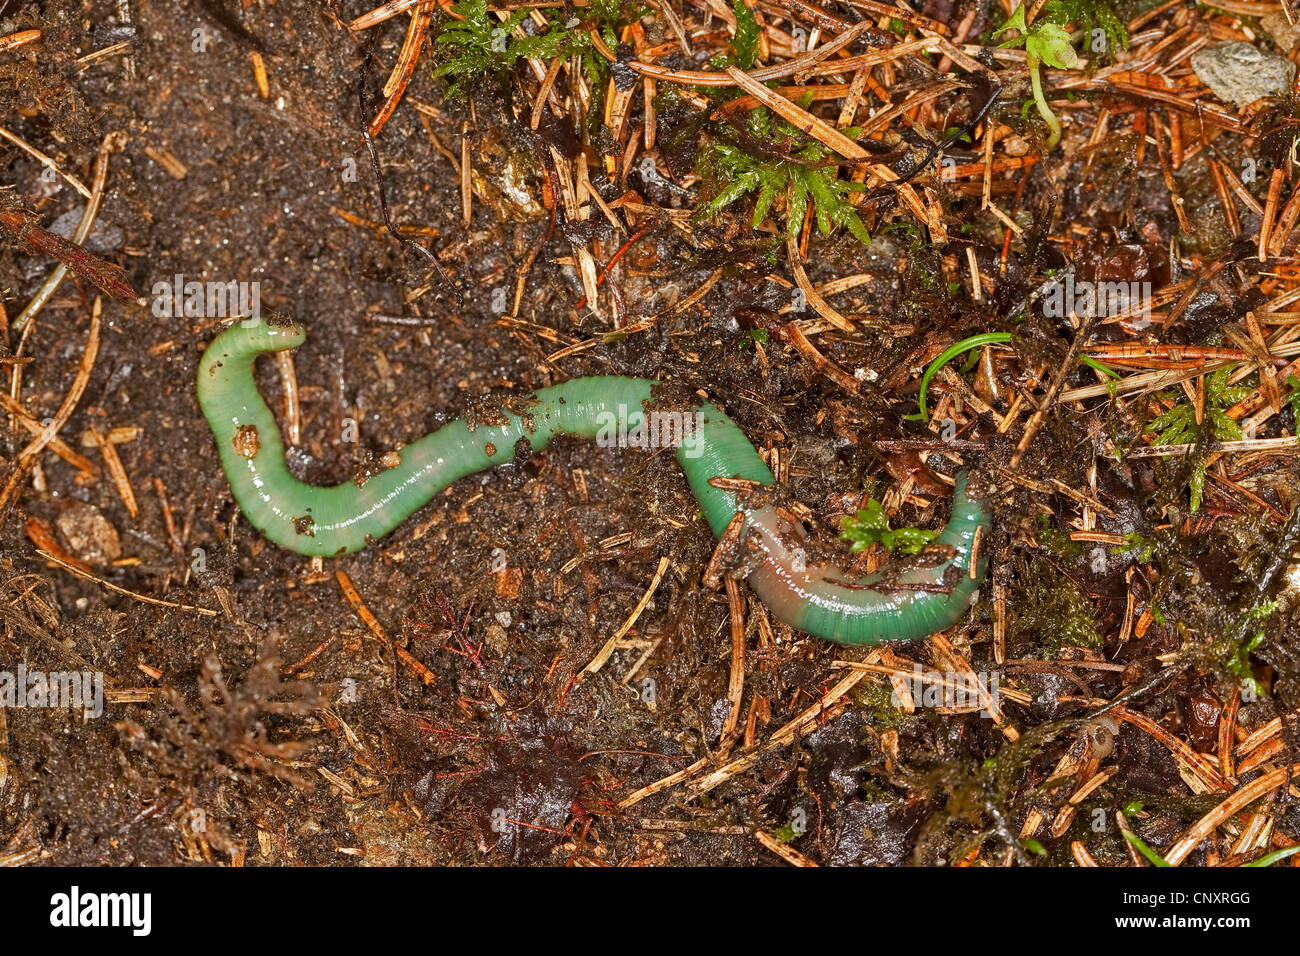 Green Earthworm (Allolobophora smaragdina), on conifer forest